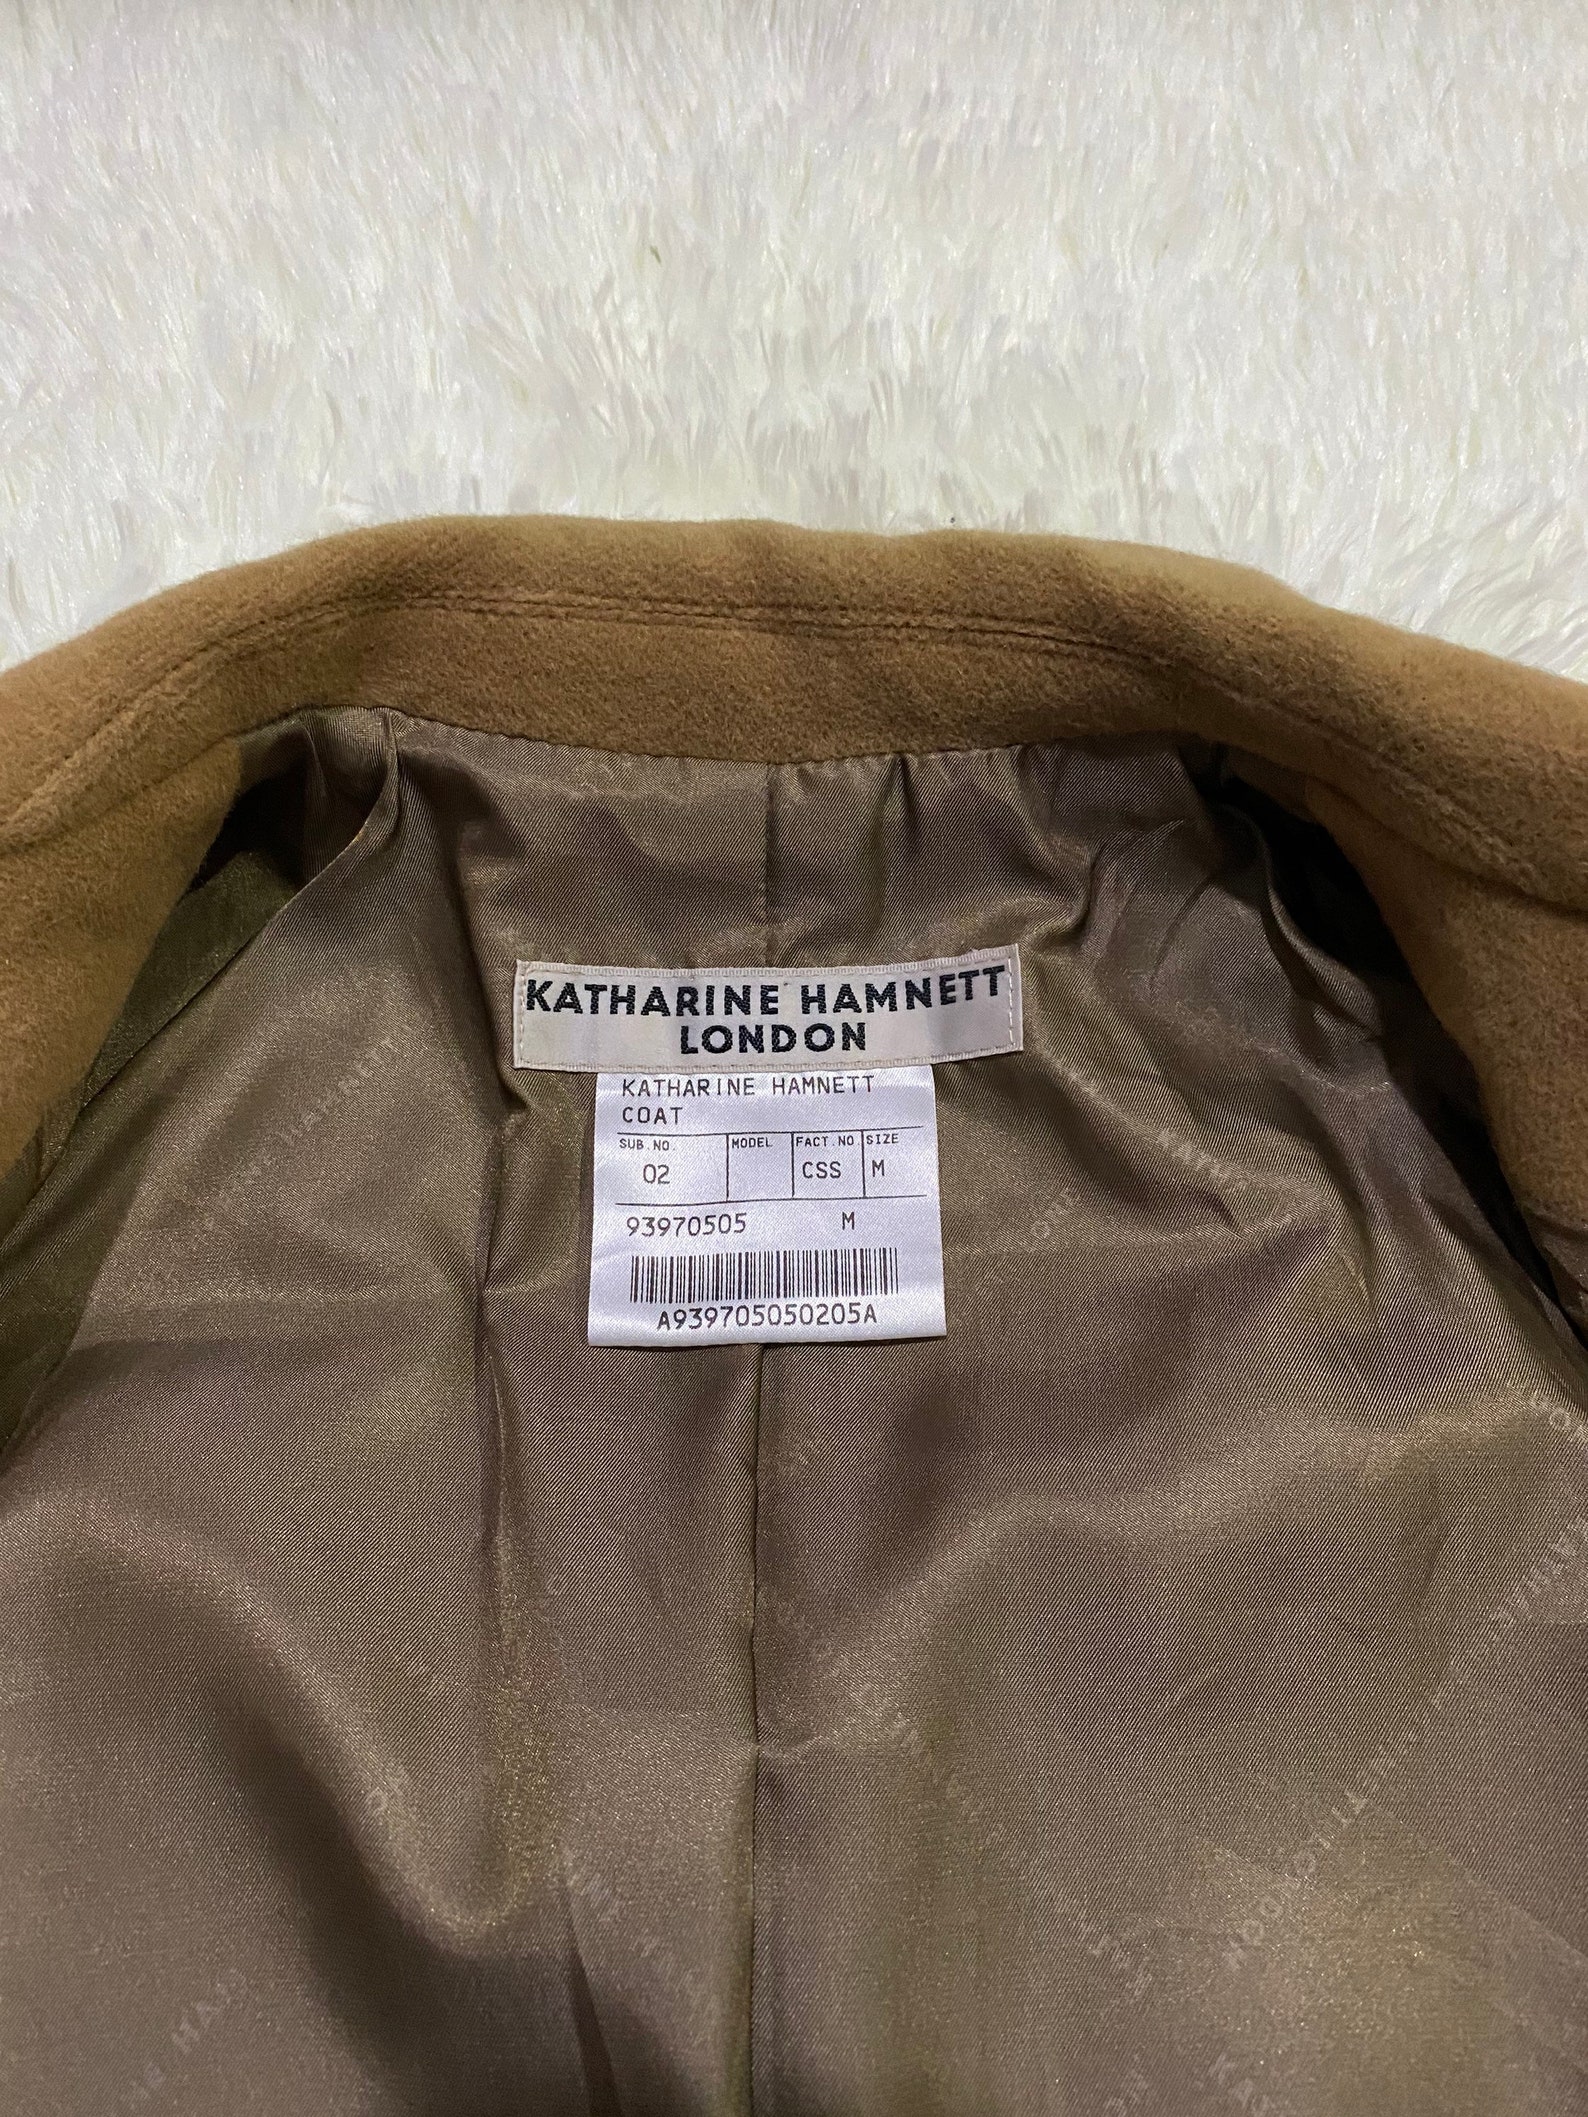 Katharine Hamnett London Coat Jacket in Angora Wool | Etsy